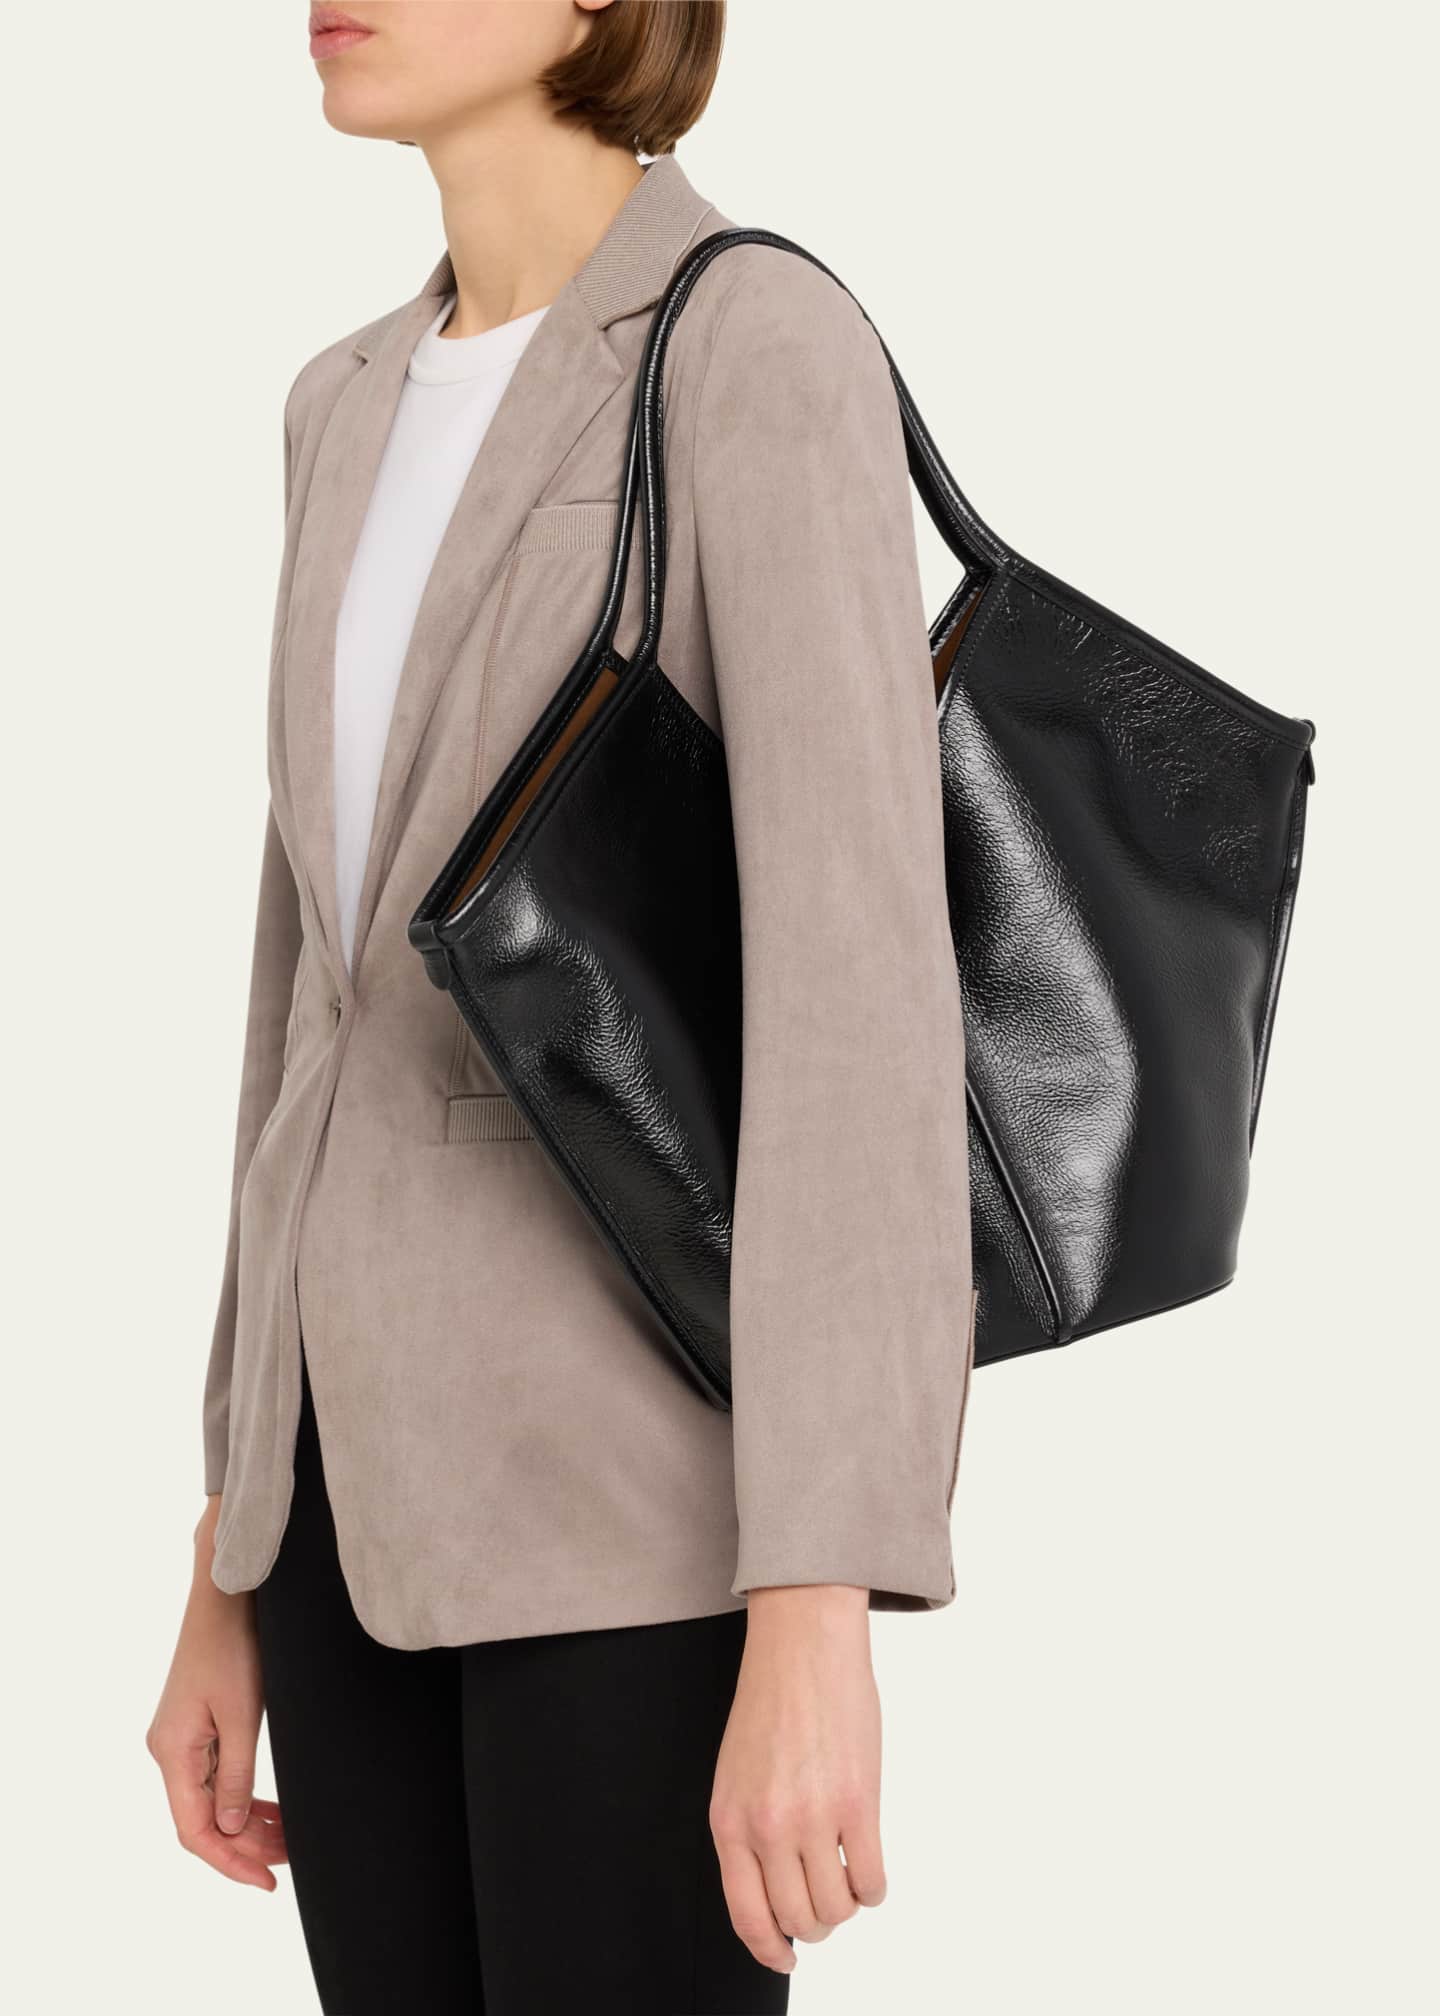 HEREU Calella Distressed Leather Tote Bag